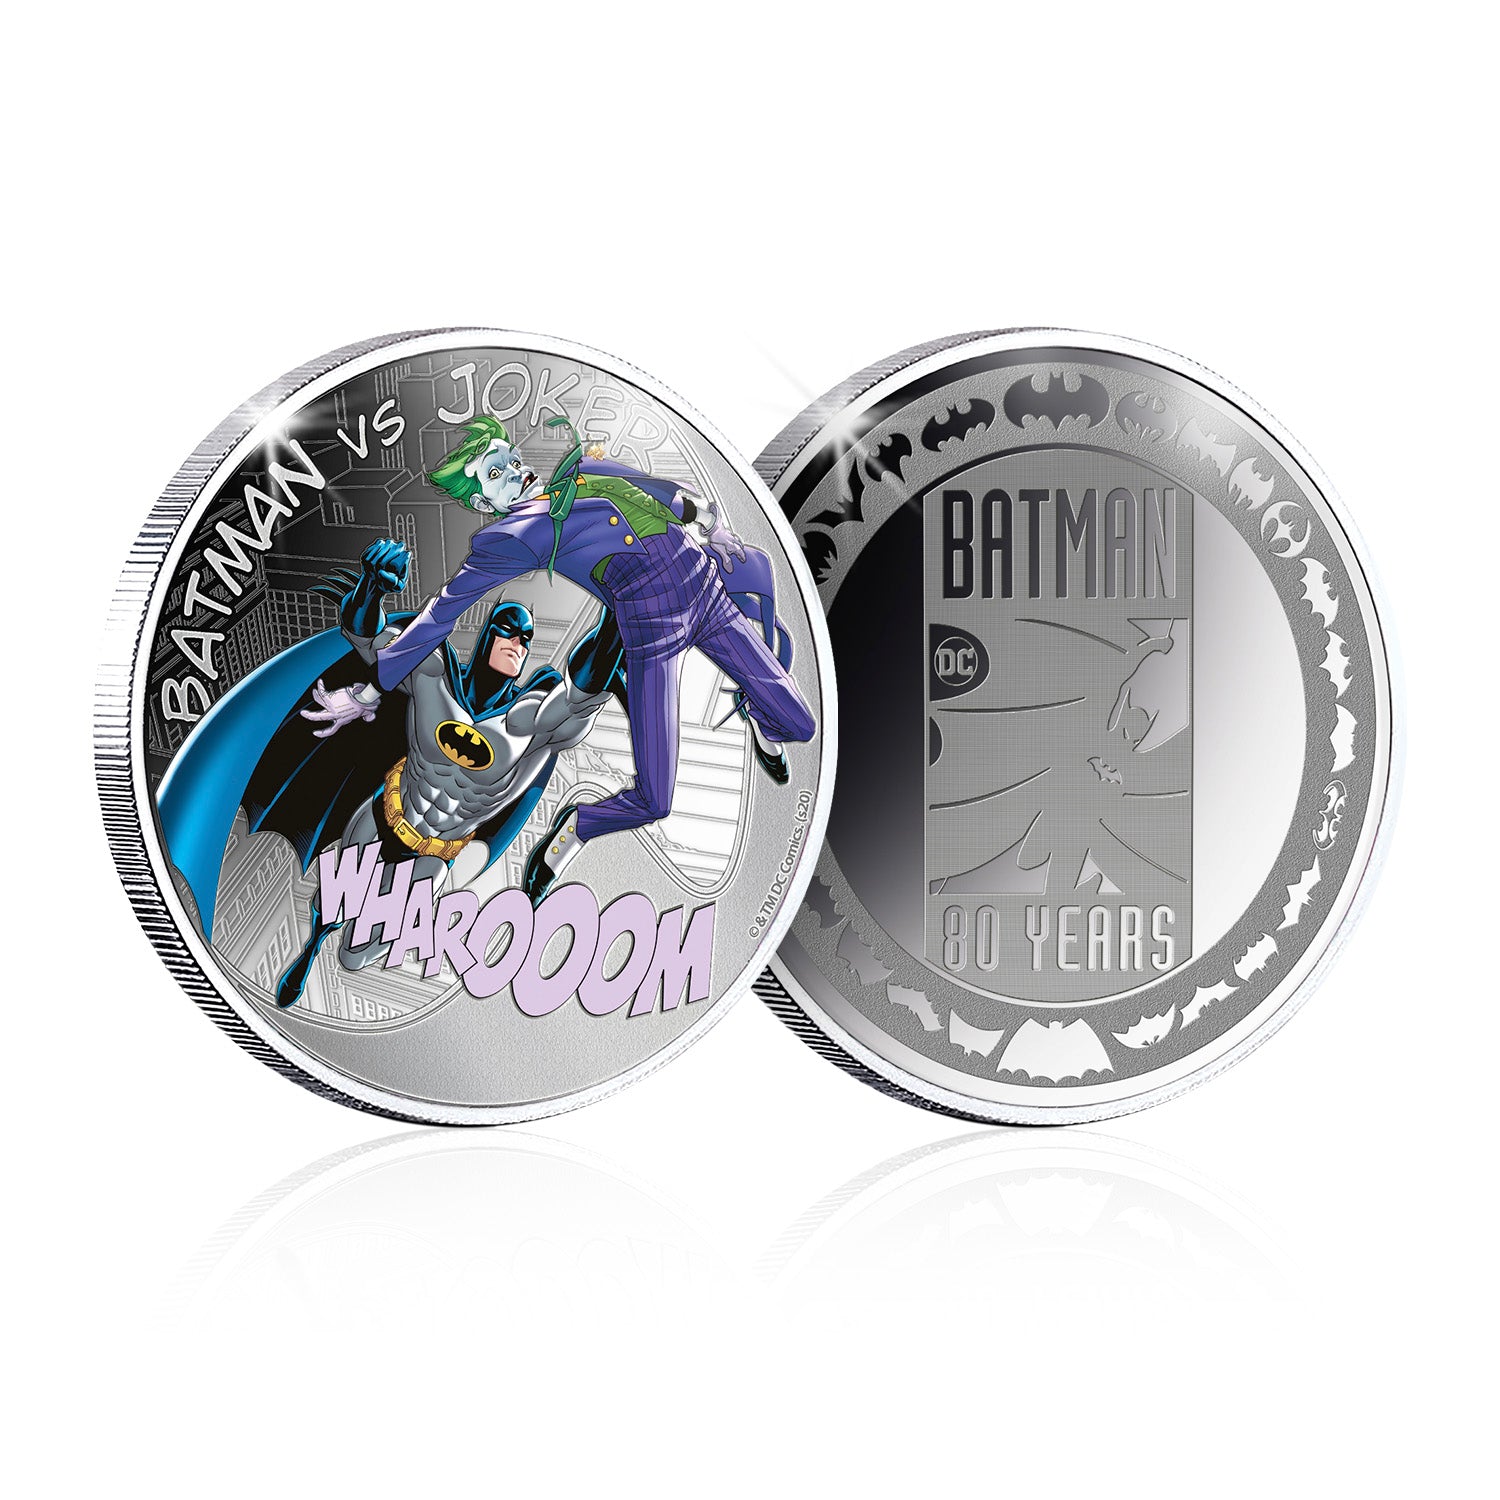 Batman vs Joker plaqué argent commémoratif